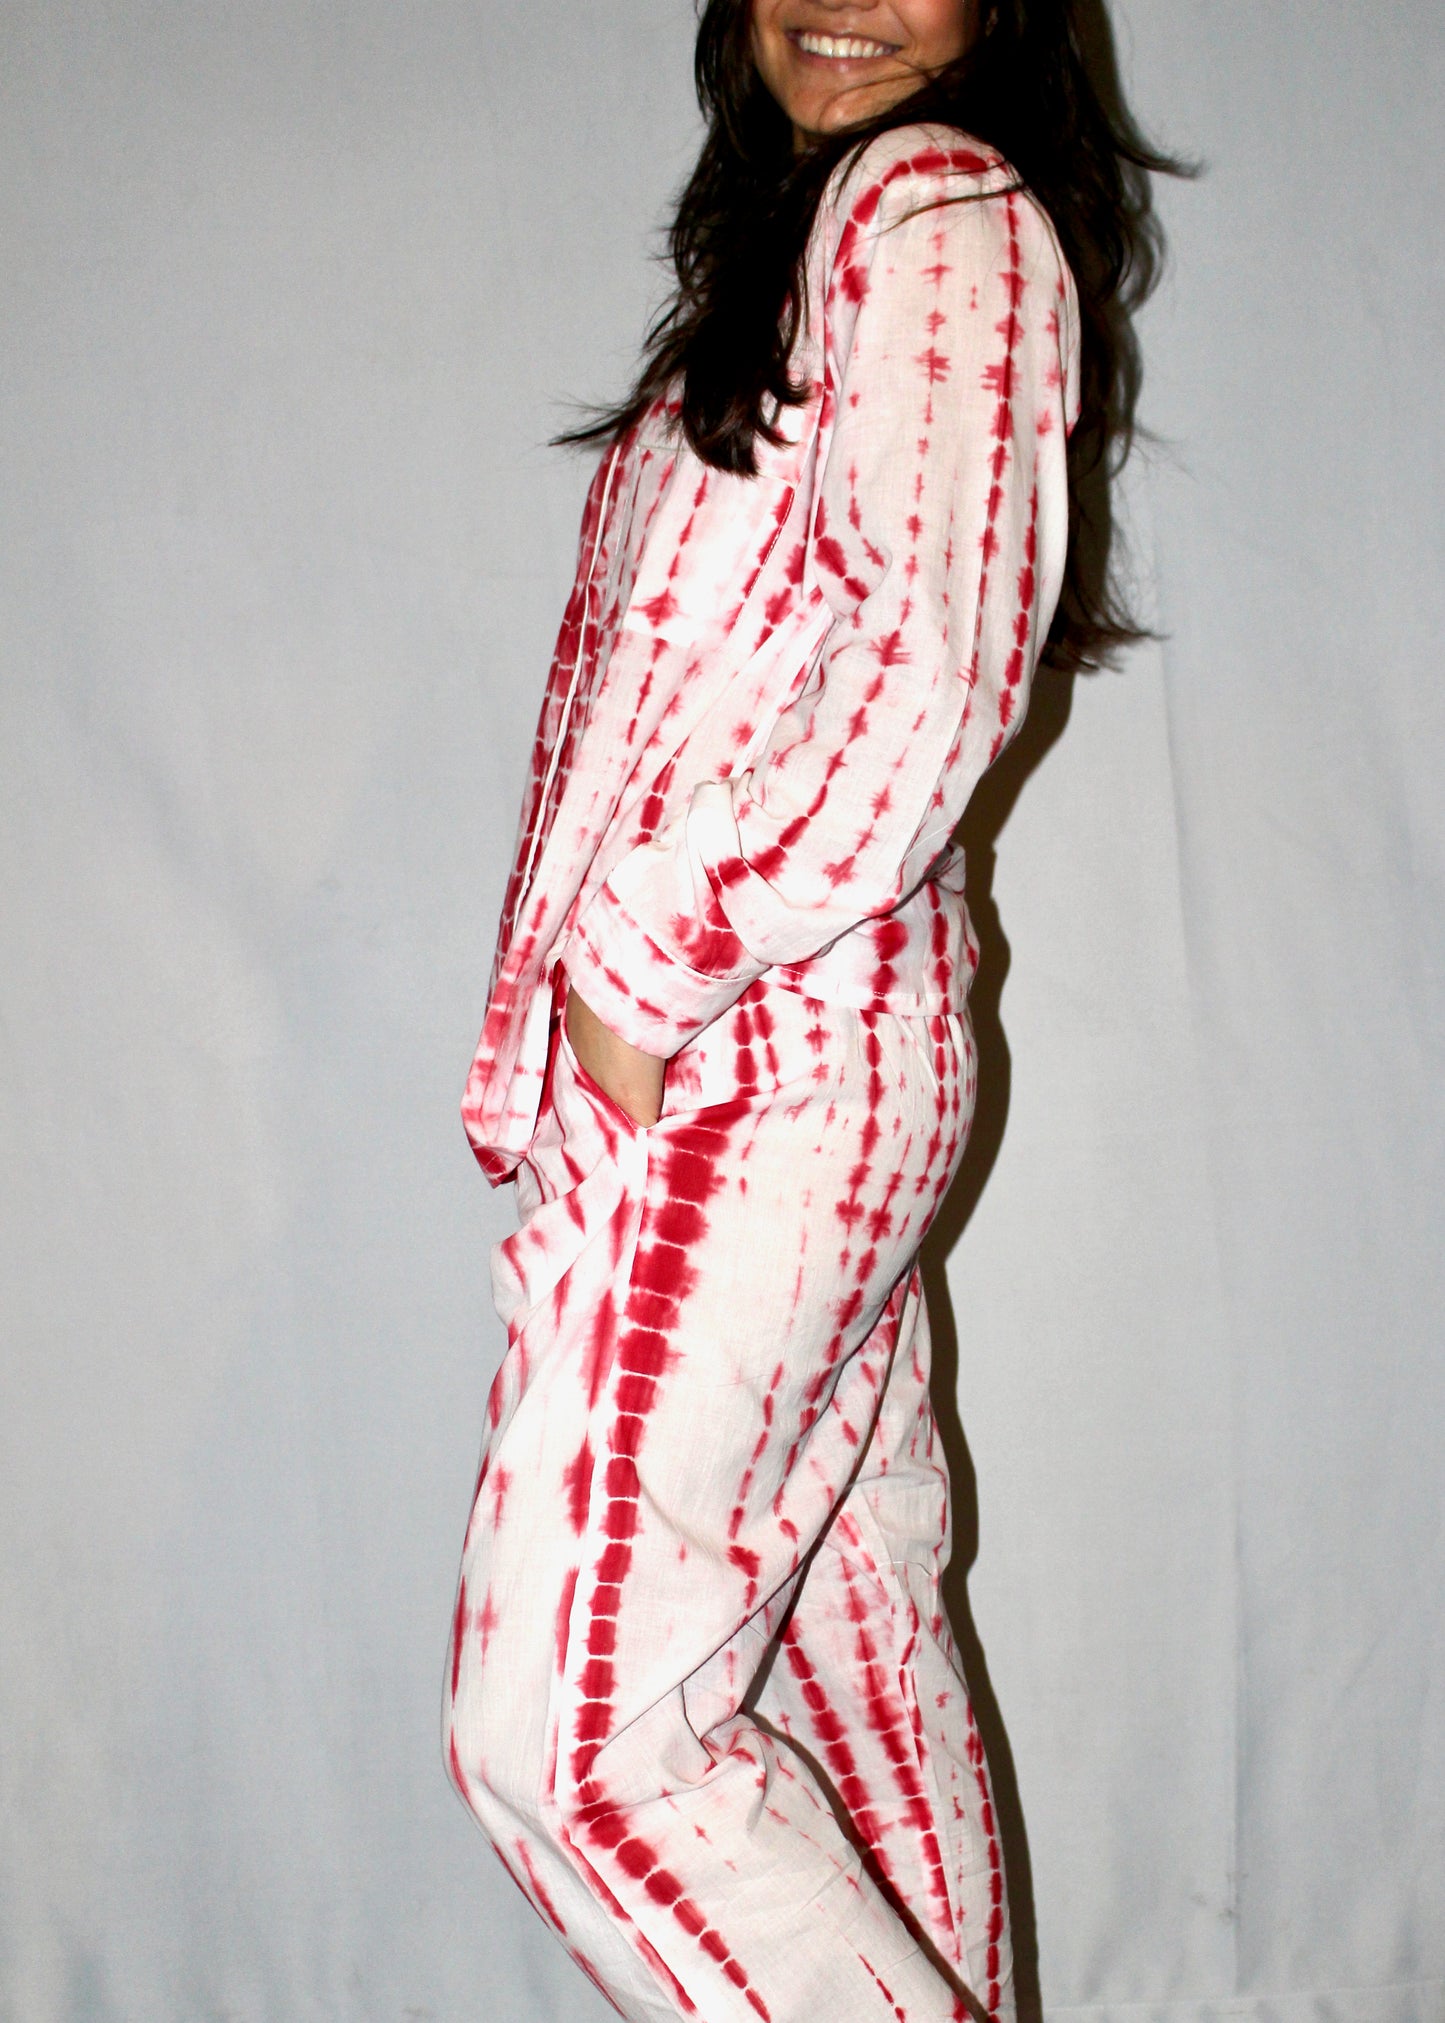 Shibori Tie-Dye Cotton Pajamas in Red and White I Cotton Pajamas I Bachelorette Pajamas I Mothers Day Gift - DharBazaar